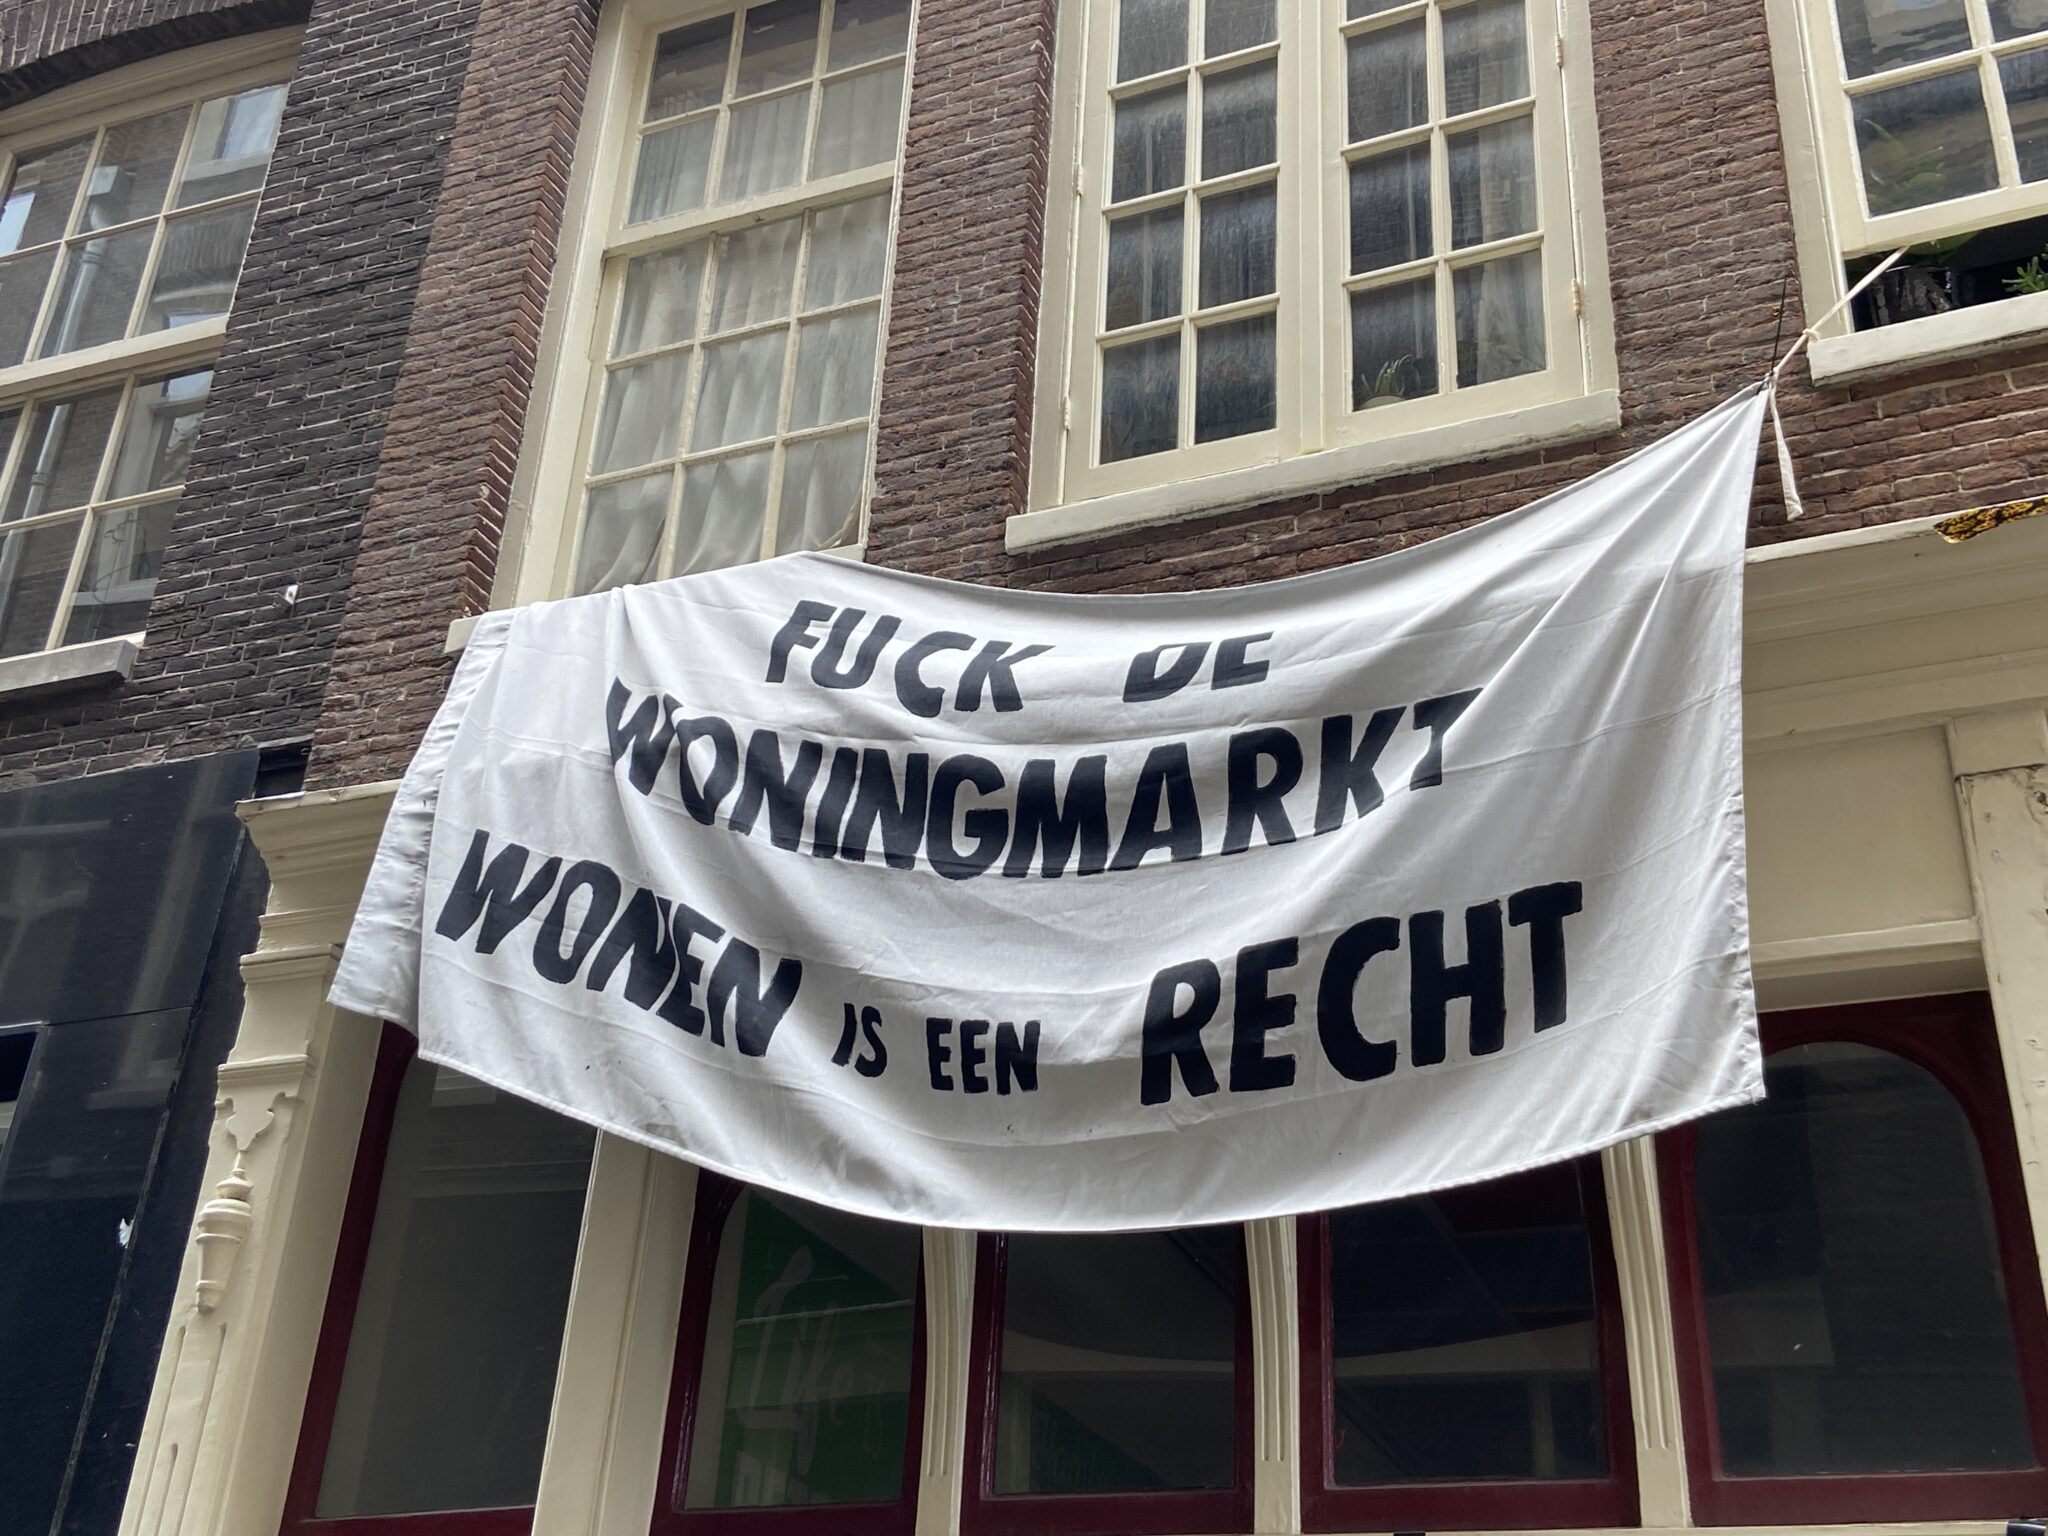 using-market-protest-banner-in-Amsterdam-2048x1536.jpg